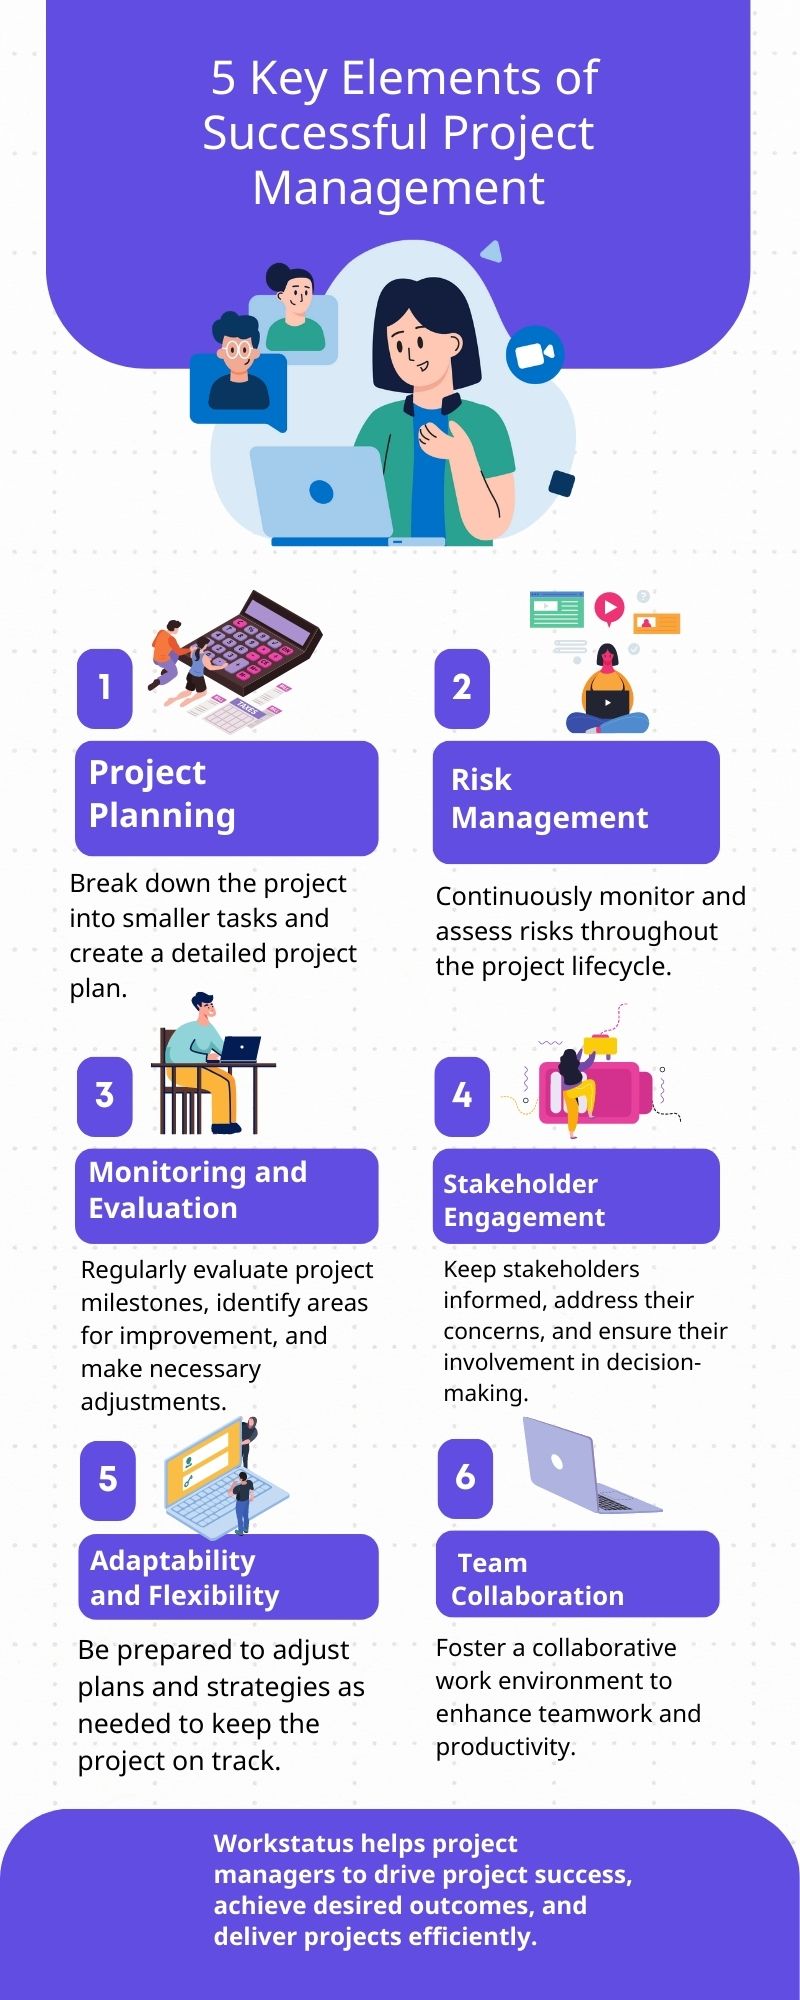 Info key element of Project Management (2)